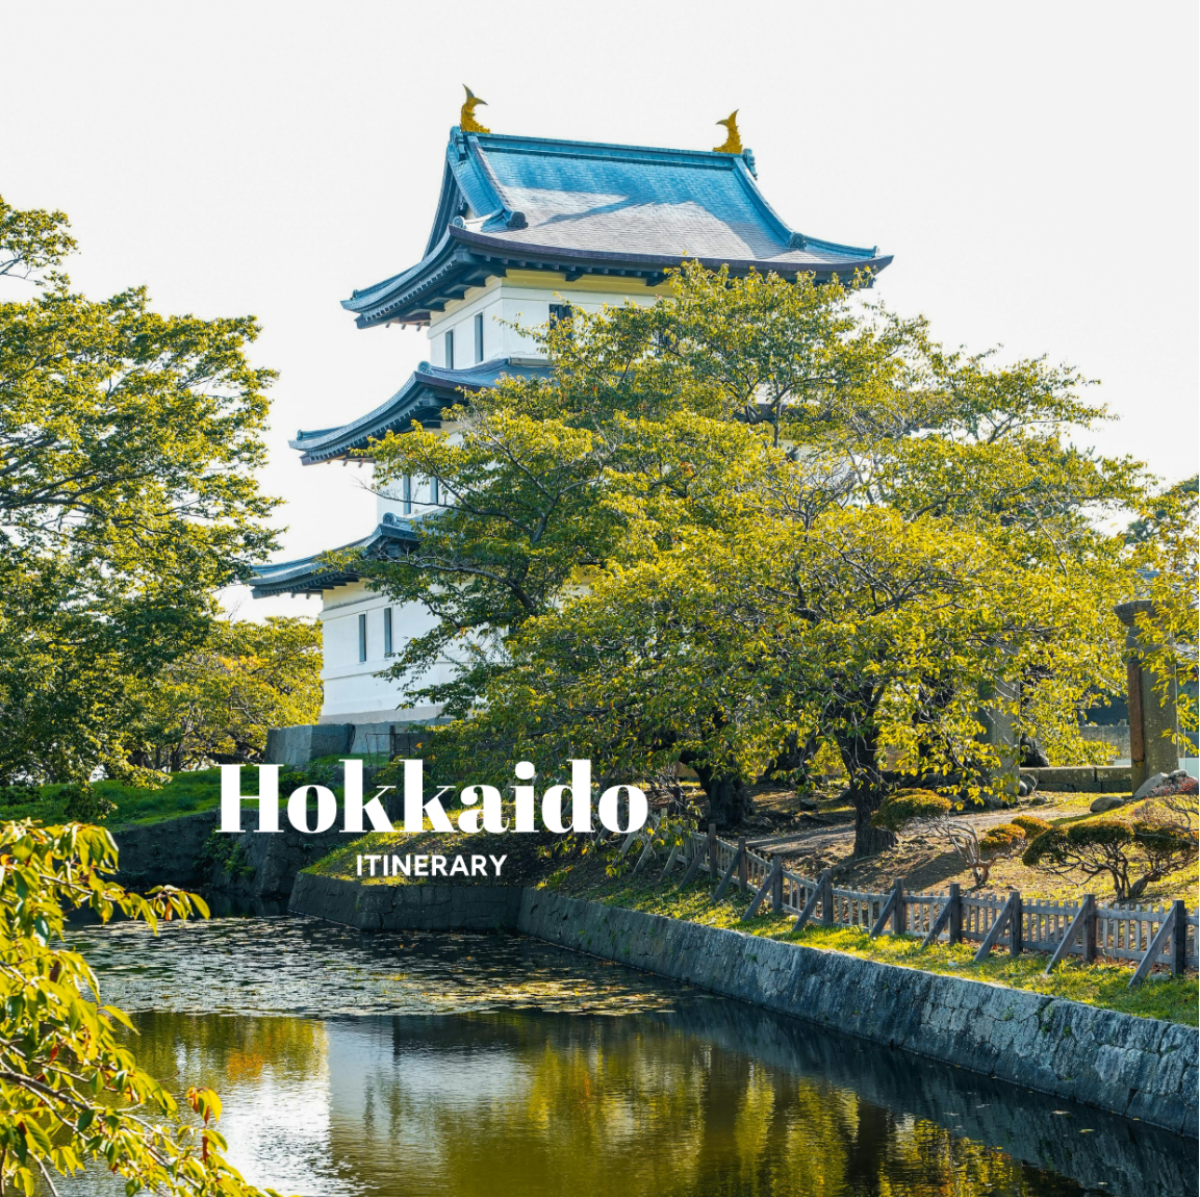 Hokkaido Itinerary Template